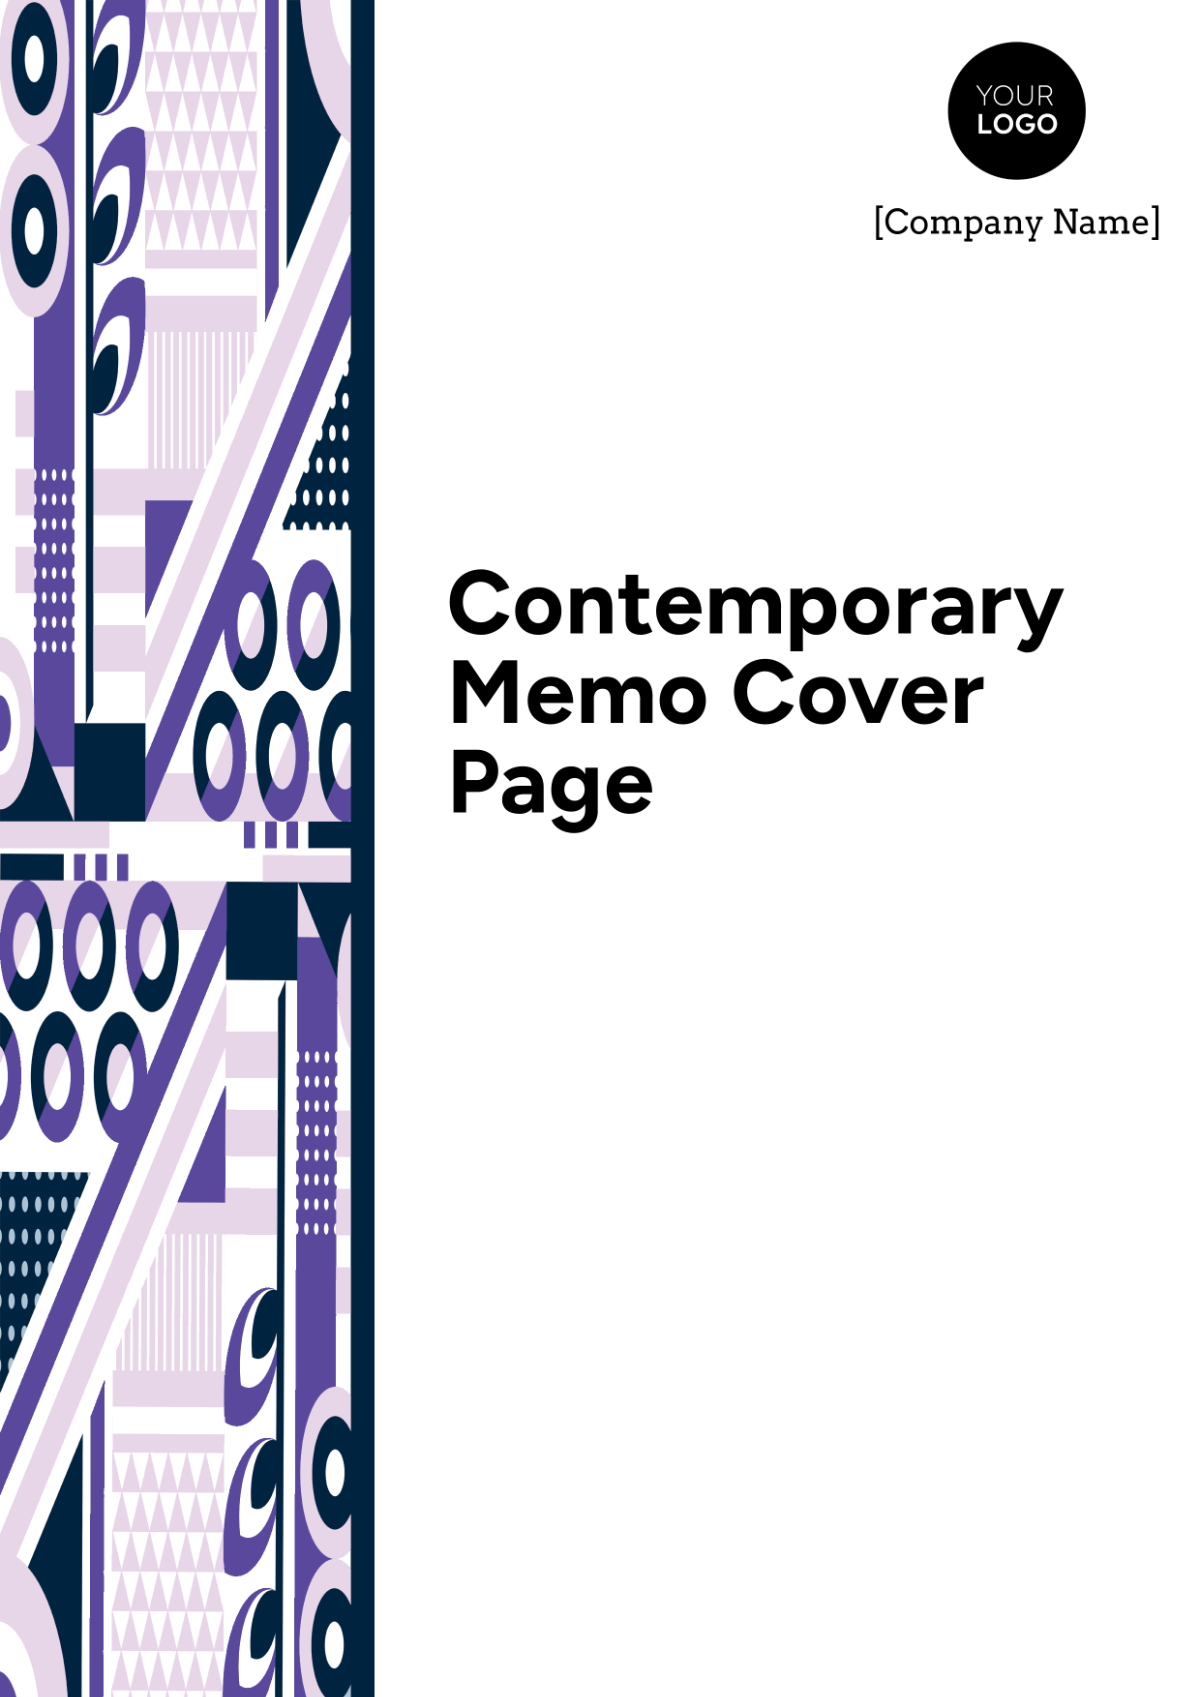 Contemporary Memo Cover Page Template